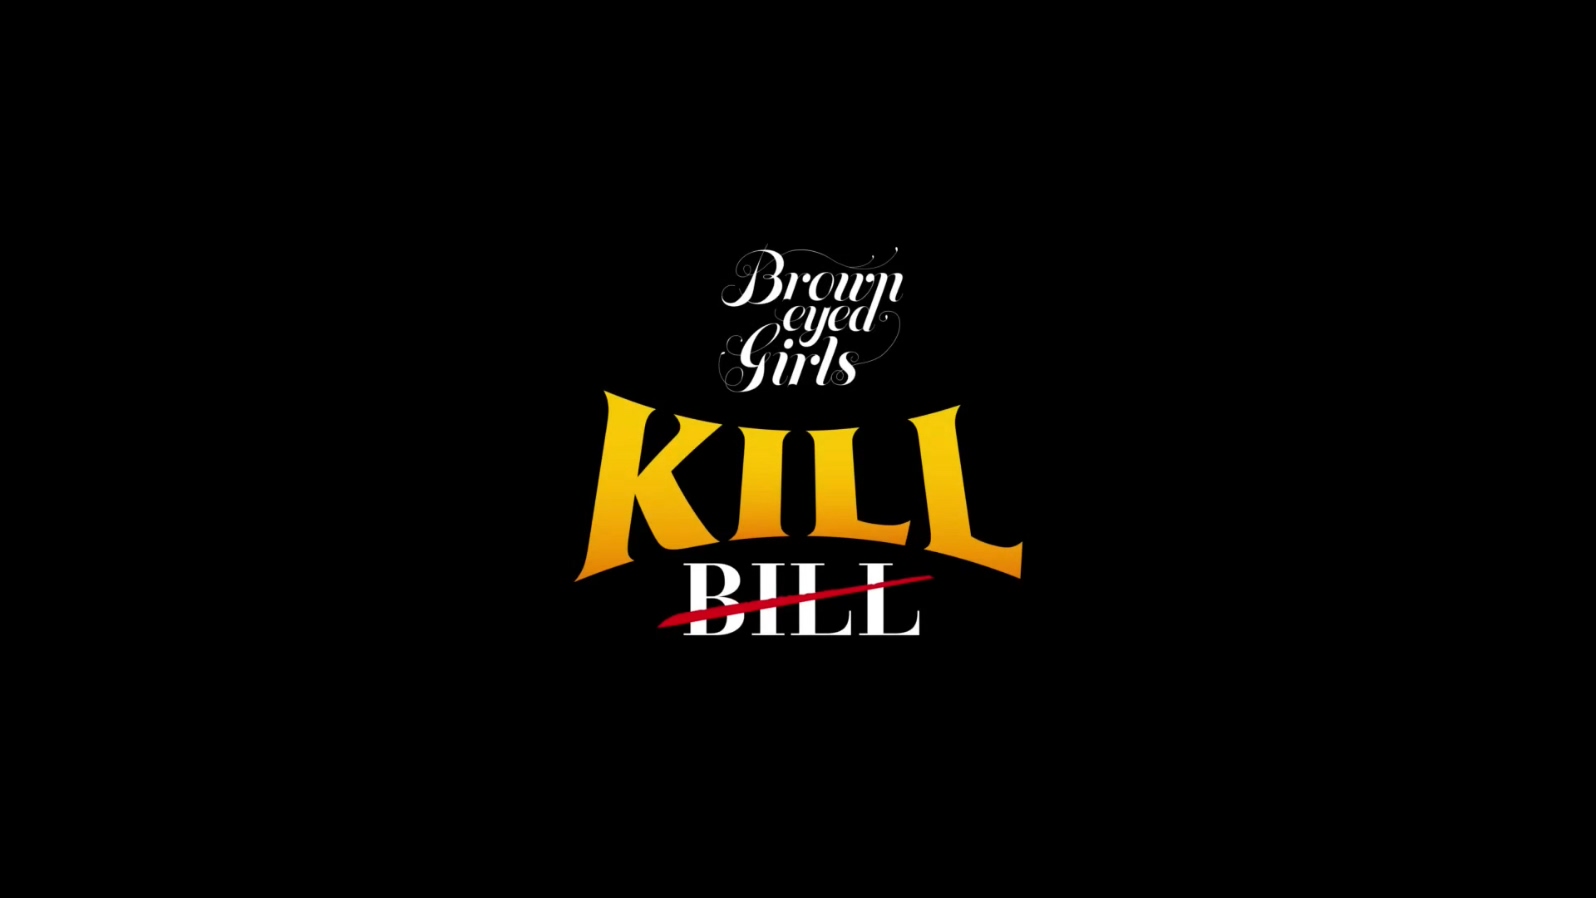 Brown Eyed Girls - Kill Bill (Dance) - 1080P